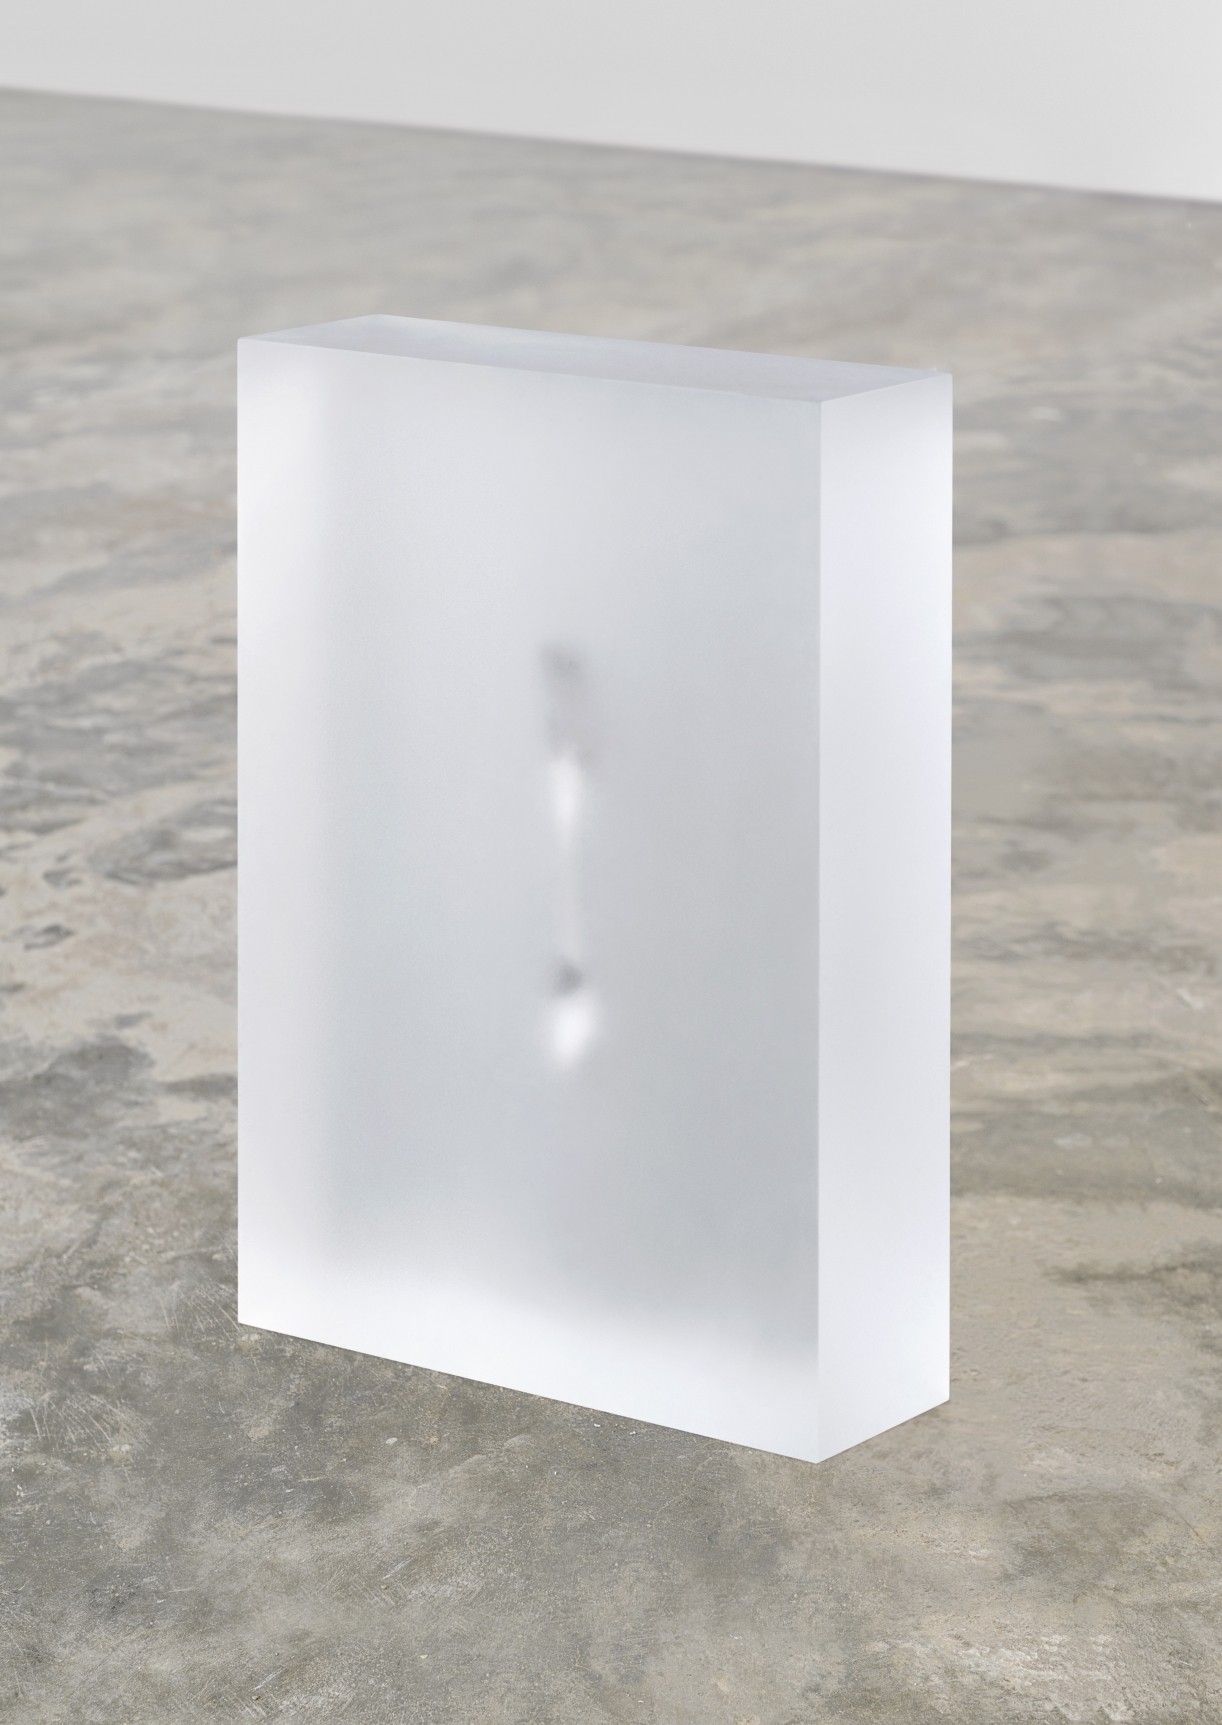 Tarik Kiswanson, Concealed, 2020, Resin cast with silverware, unique, 40 x 28 x 9 cm